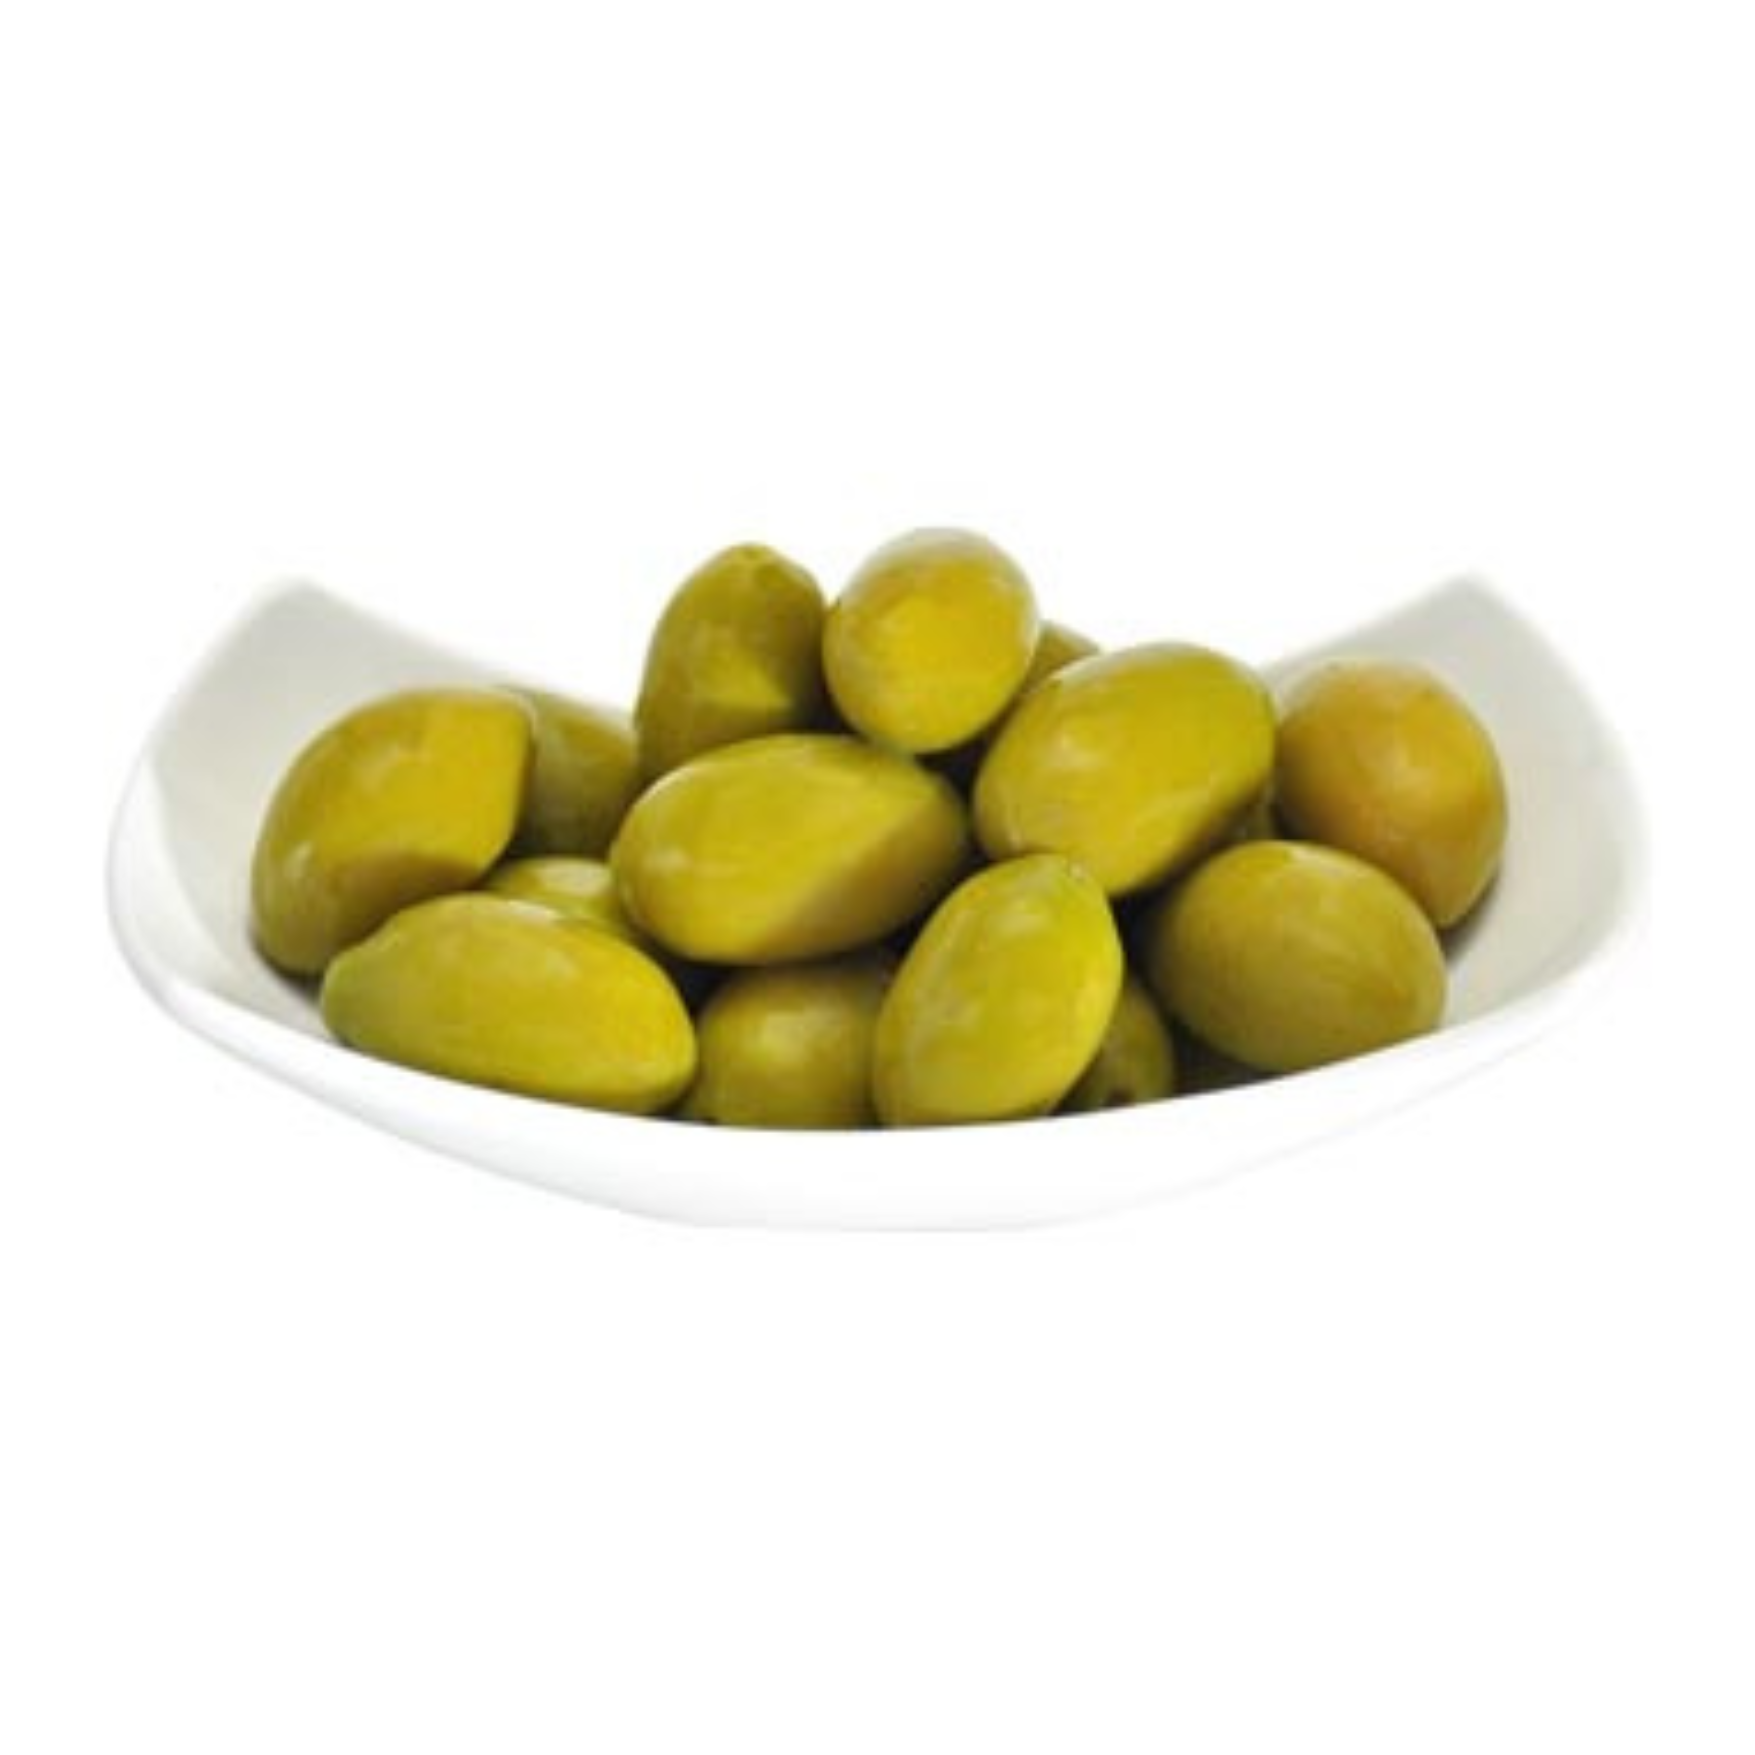 Ficacci Giant Green Cerignola Olives